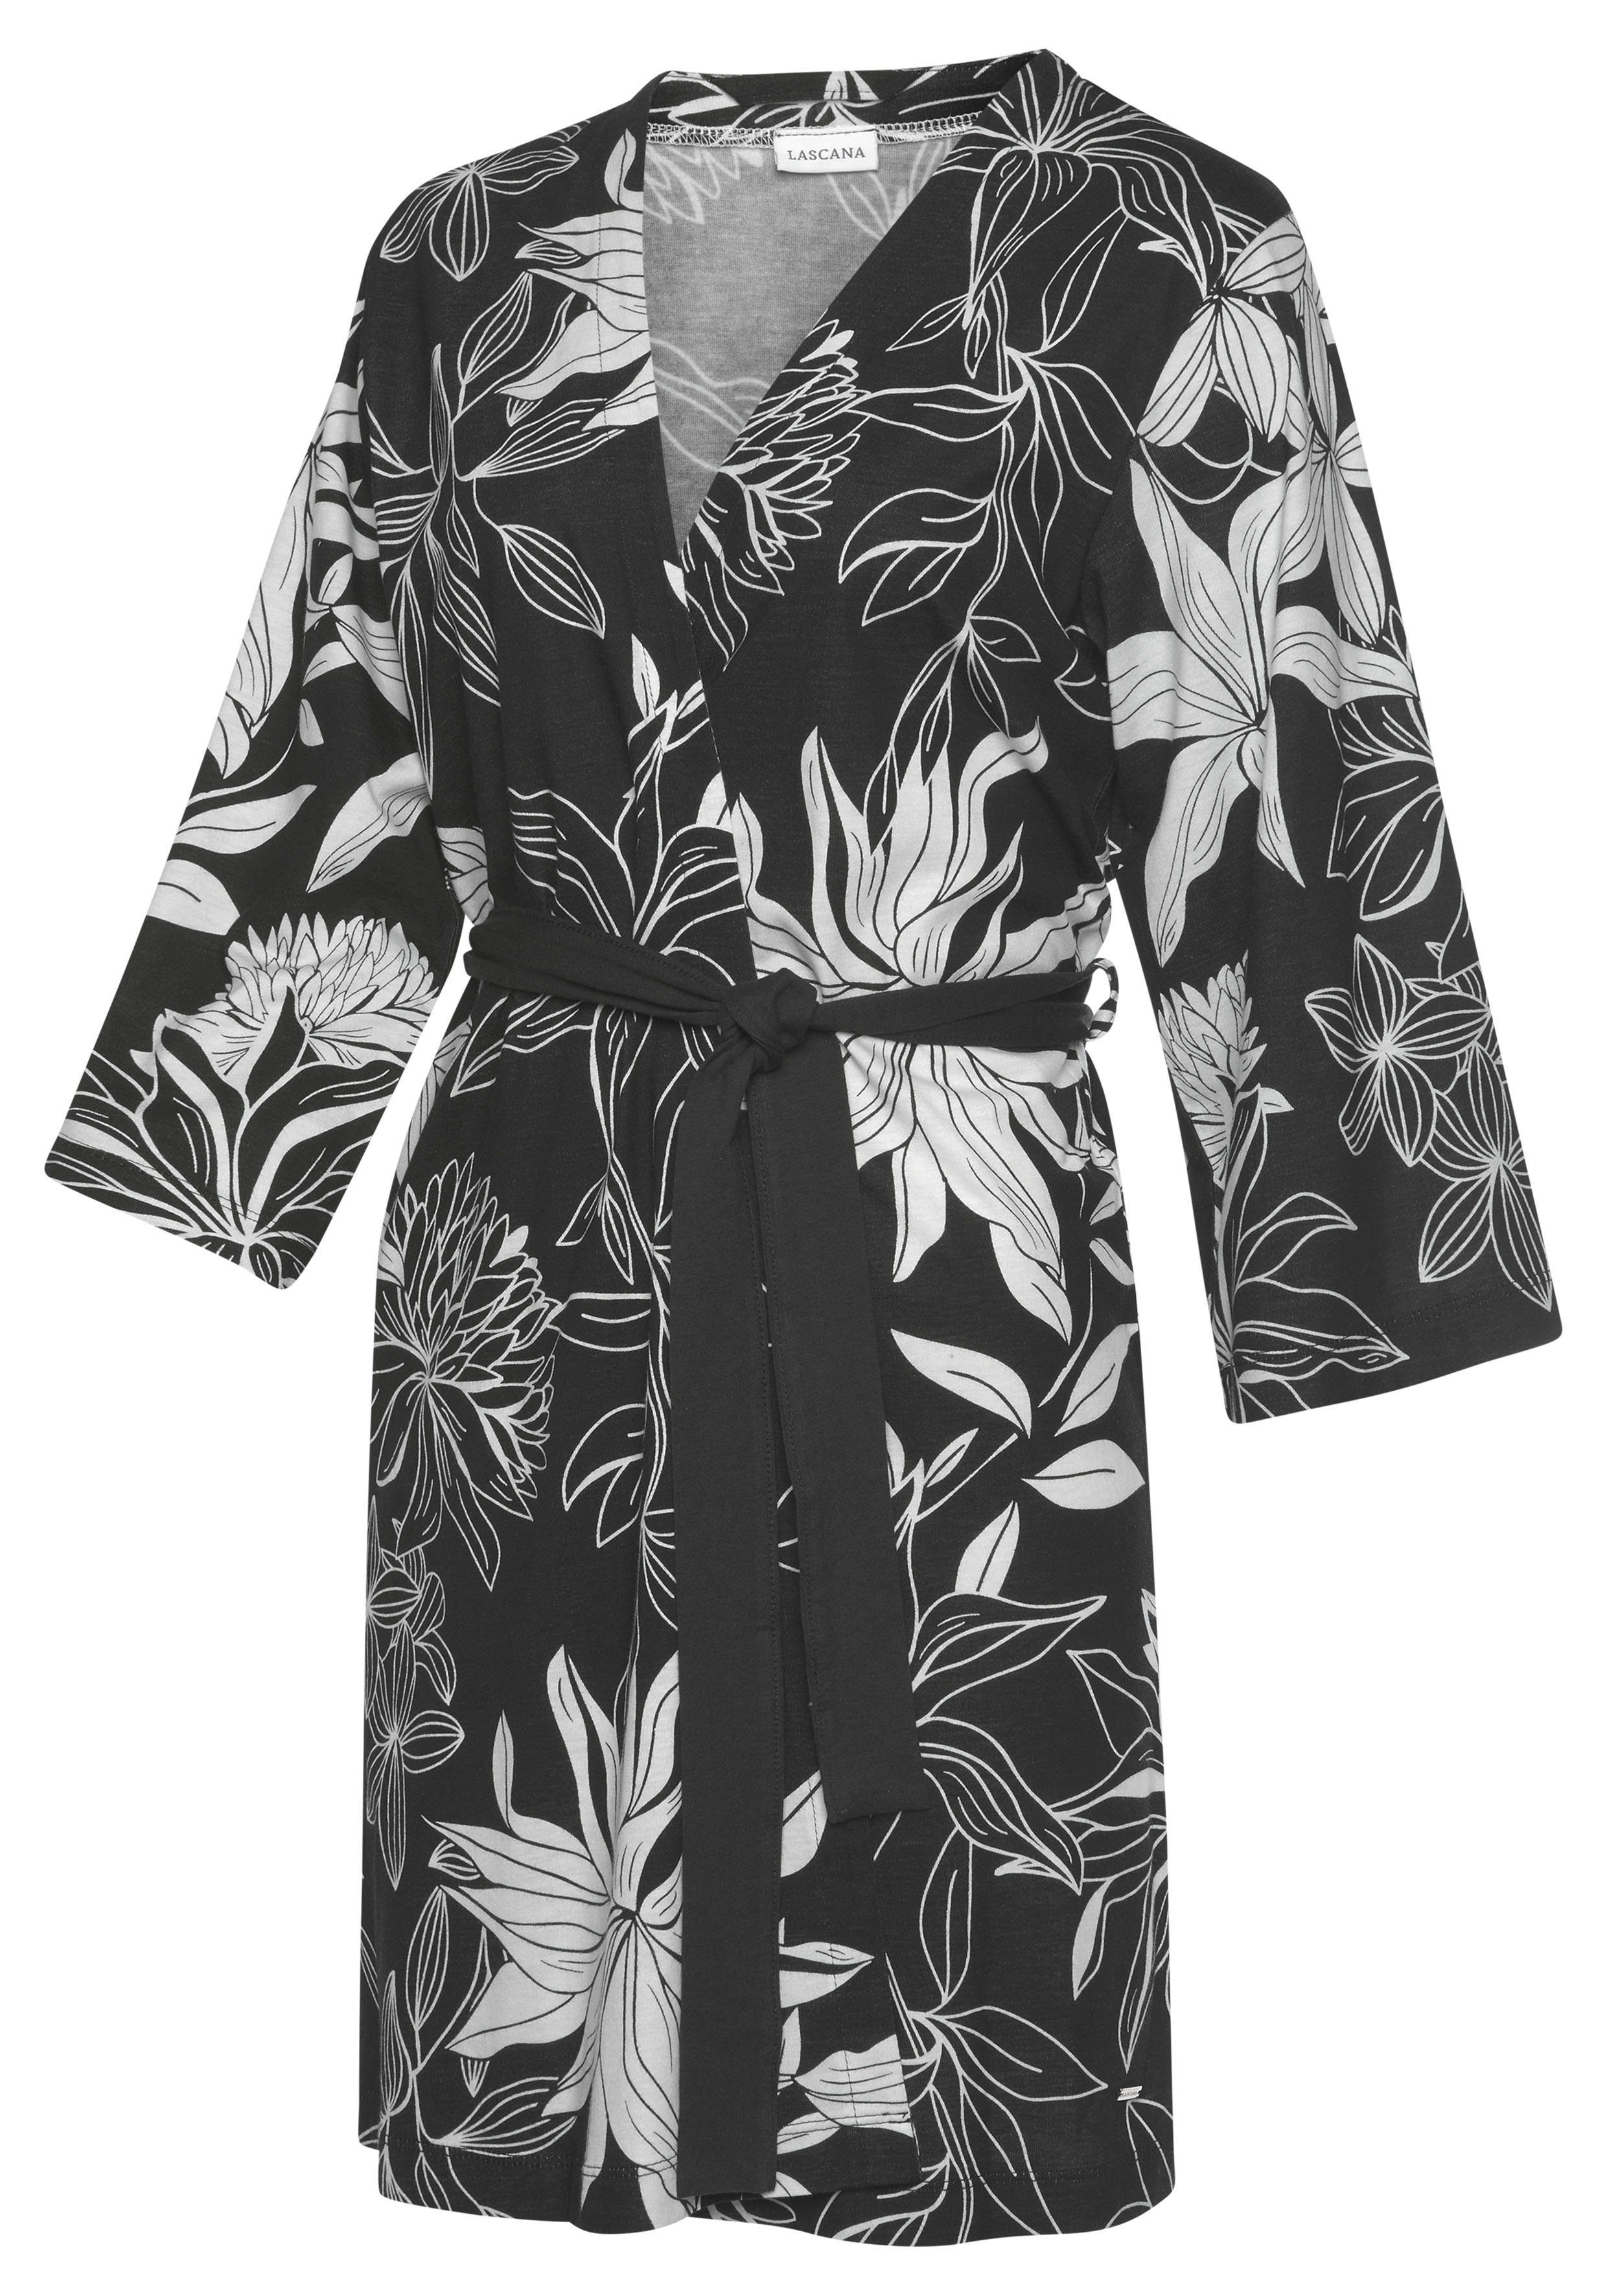 LASCANA Kimono, Kurzform, Kimono-Kragen, mit Druck floralem Single-Jersey, schwarz Gürtel